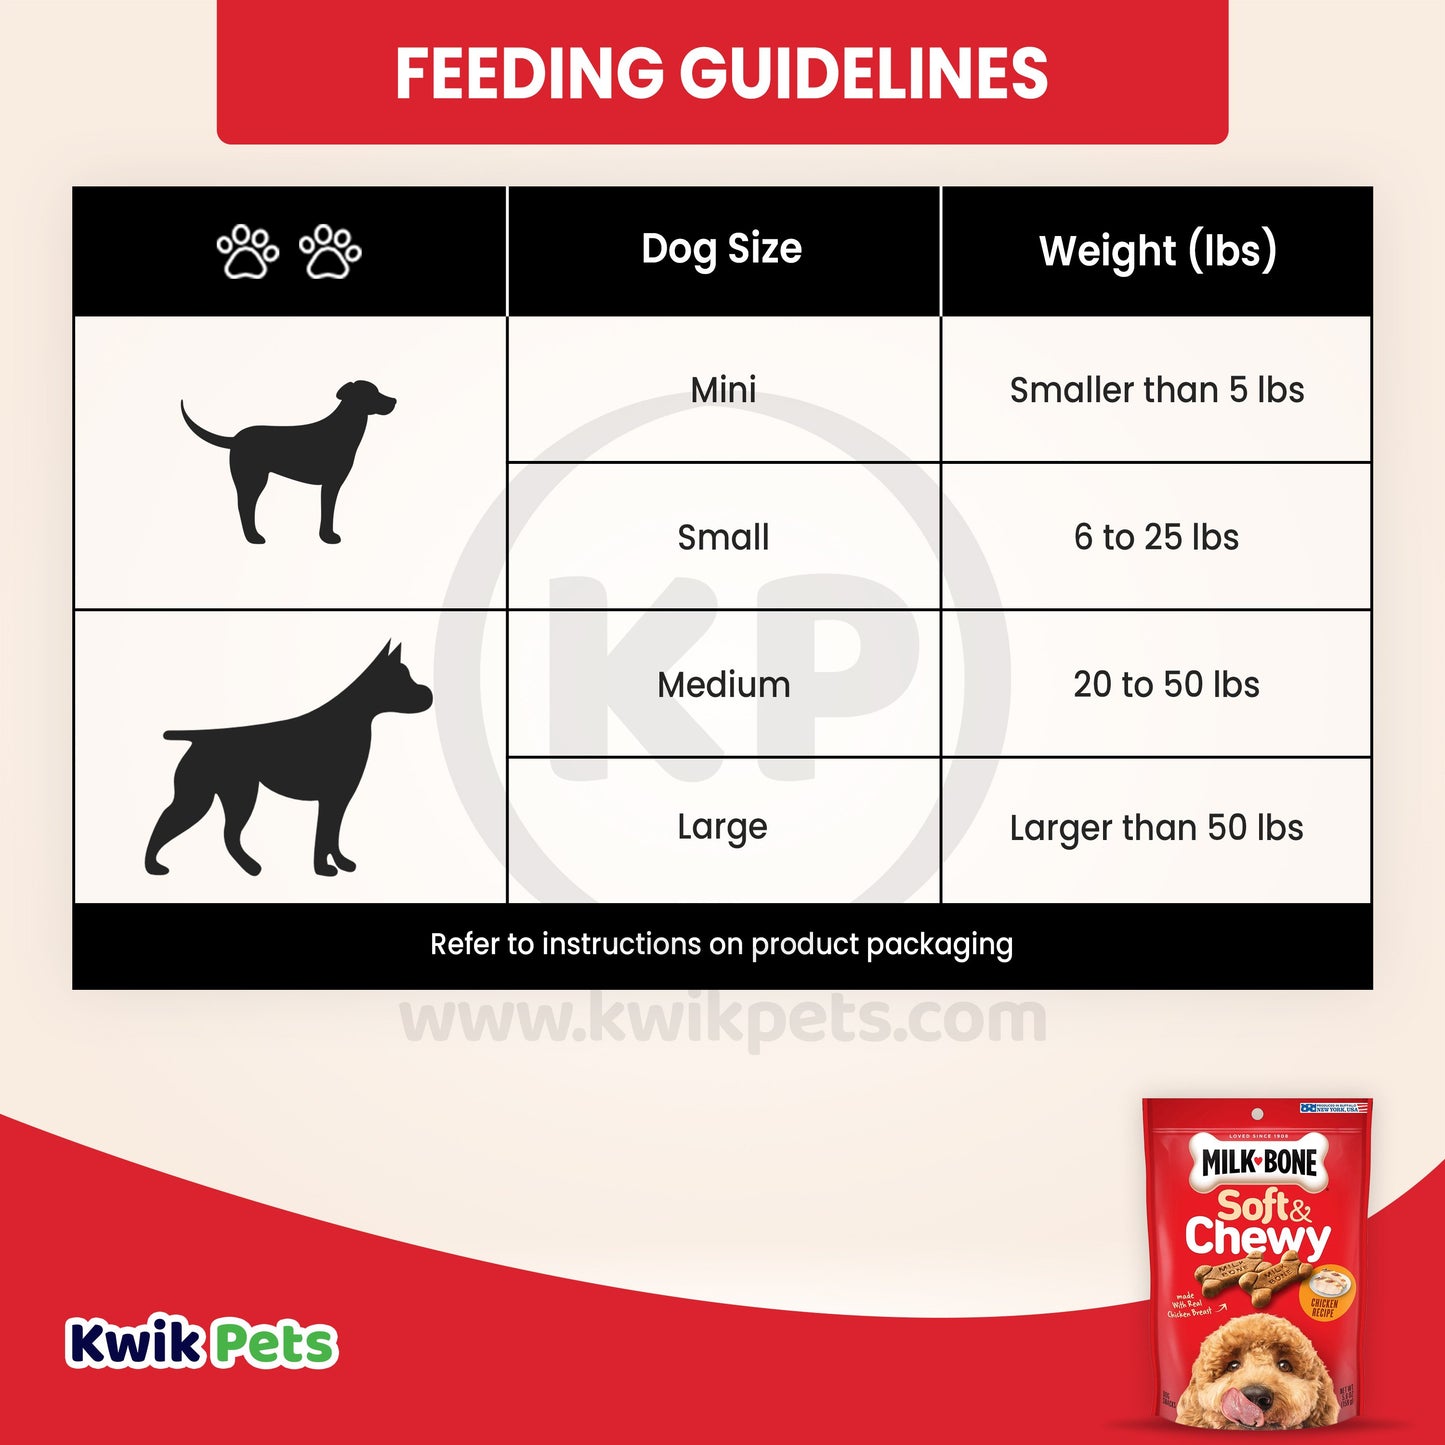 Milk-Bone Beef & Filet Mignon Recipe Chewy Dog Treats 5.6 oz, Milk-Bone